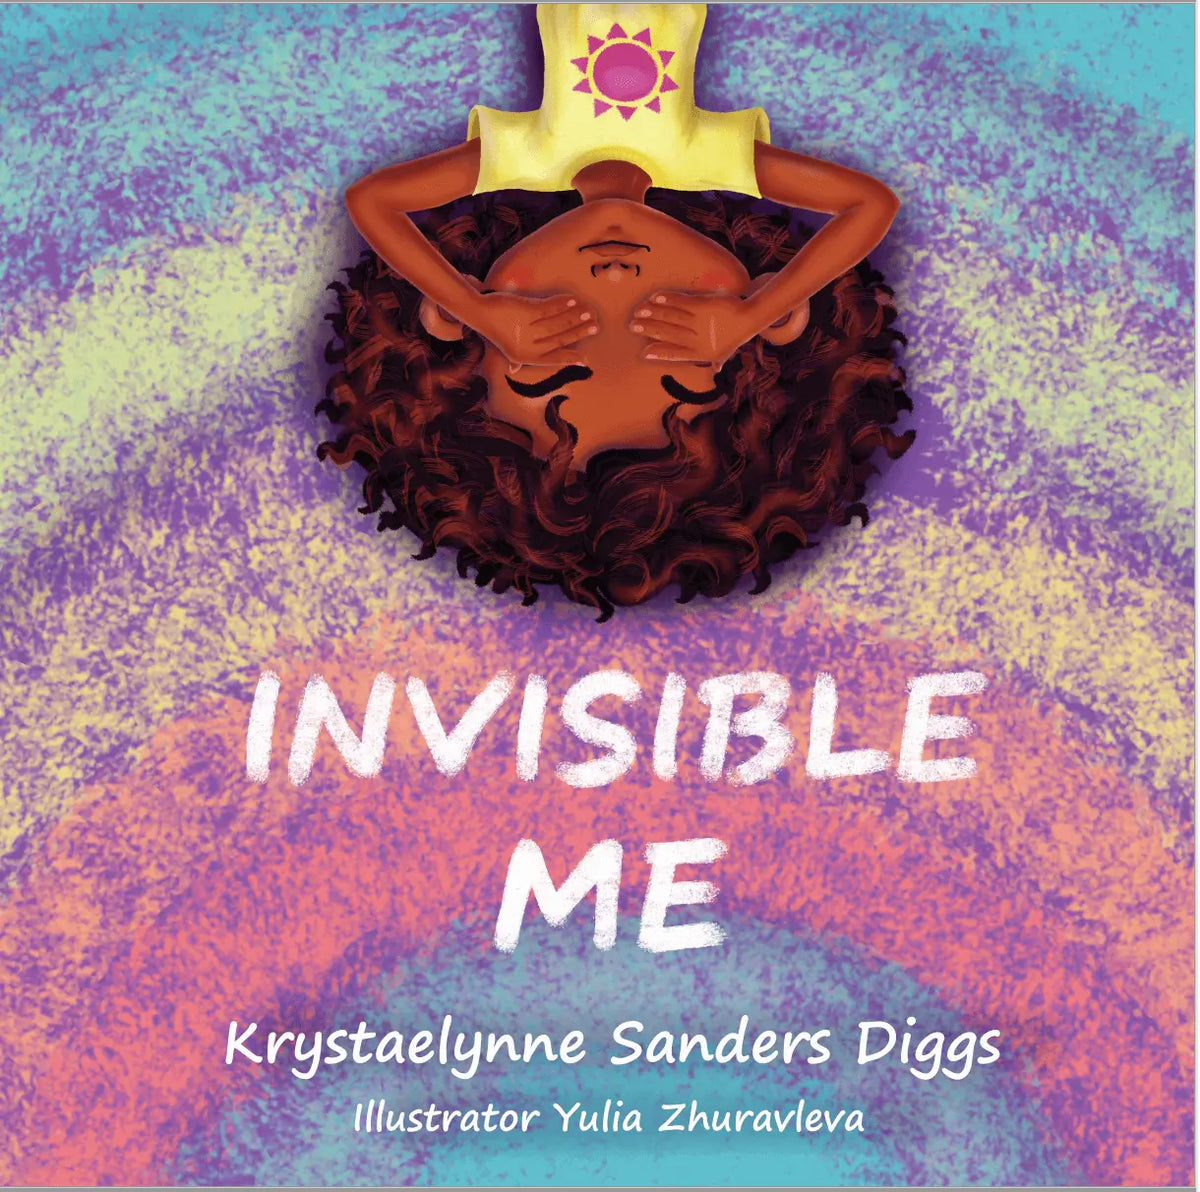 Invisible Me - Author Krystaelynne Sanders Diggs